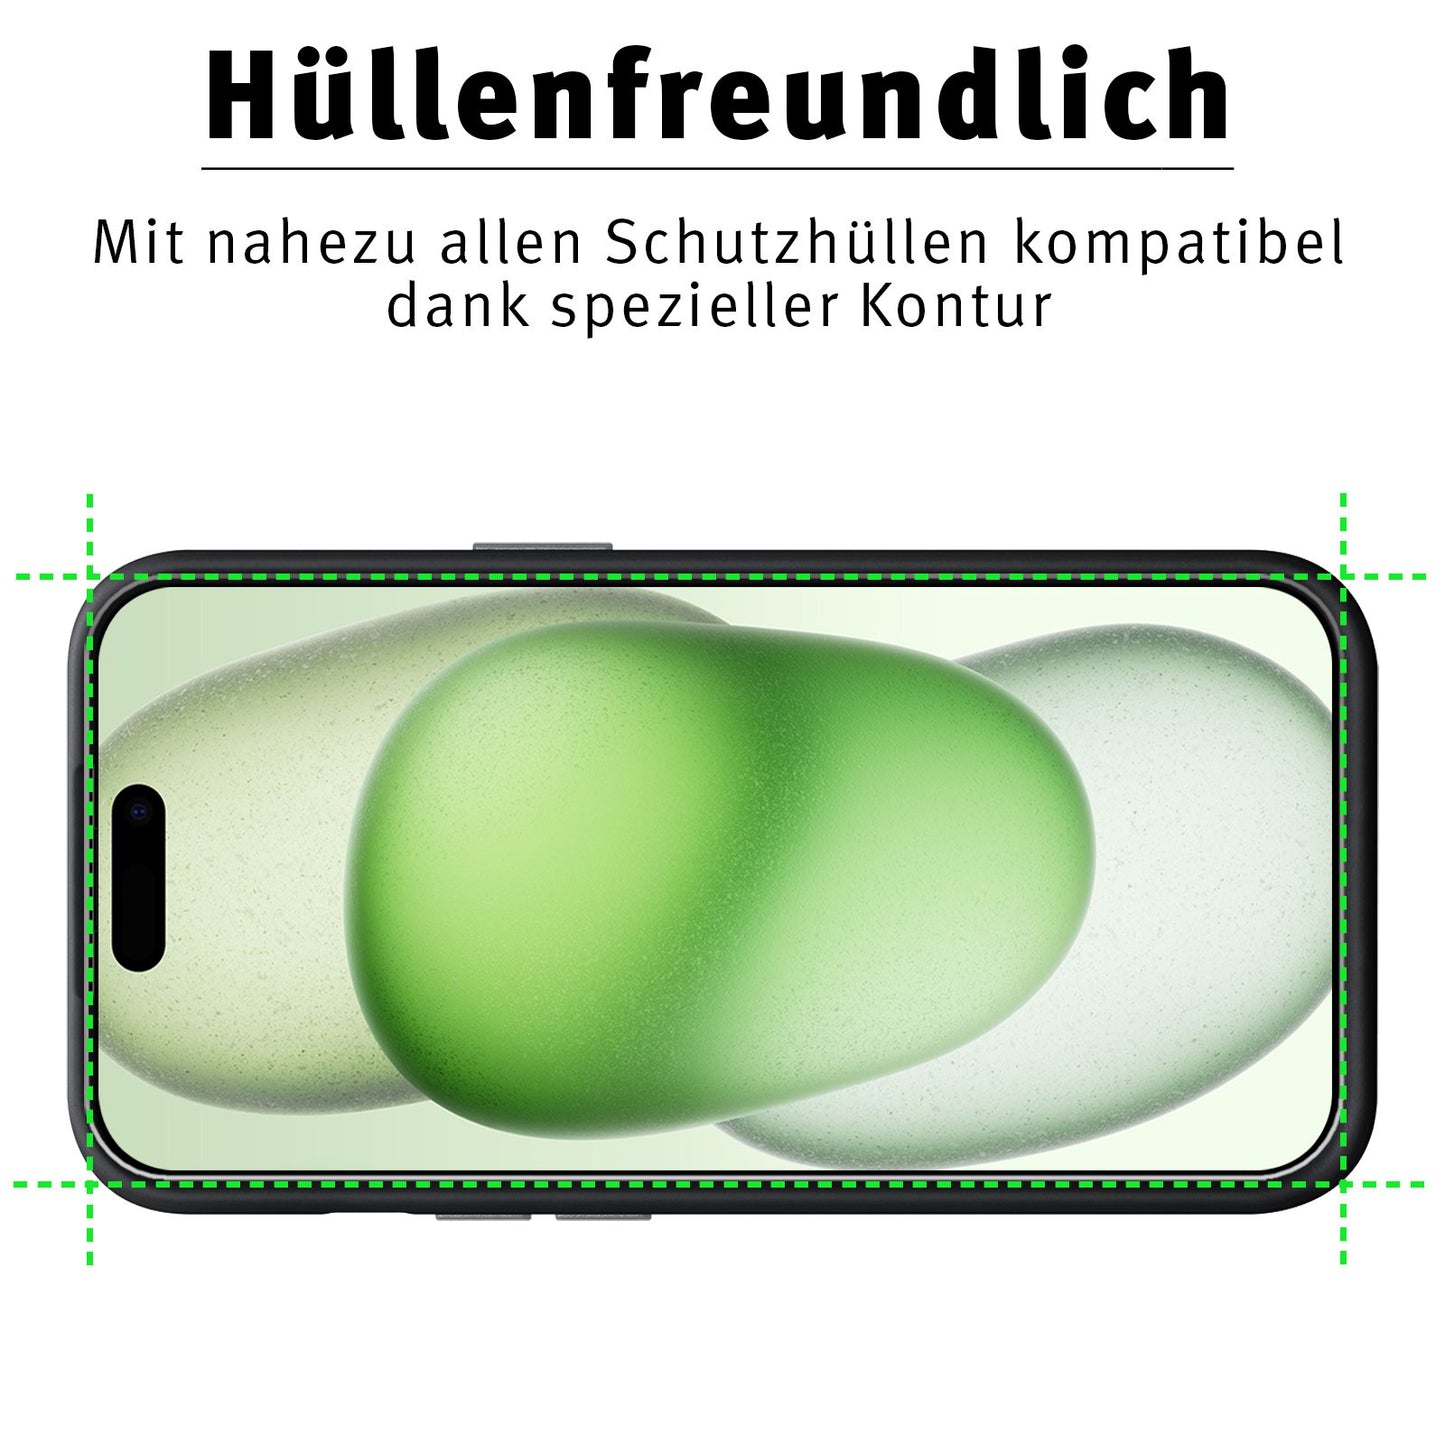 ArktisPRO iPhone 15 Plus Displayschutz GLAS - 2er Set